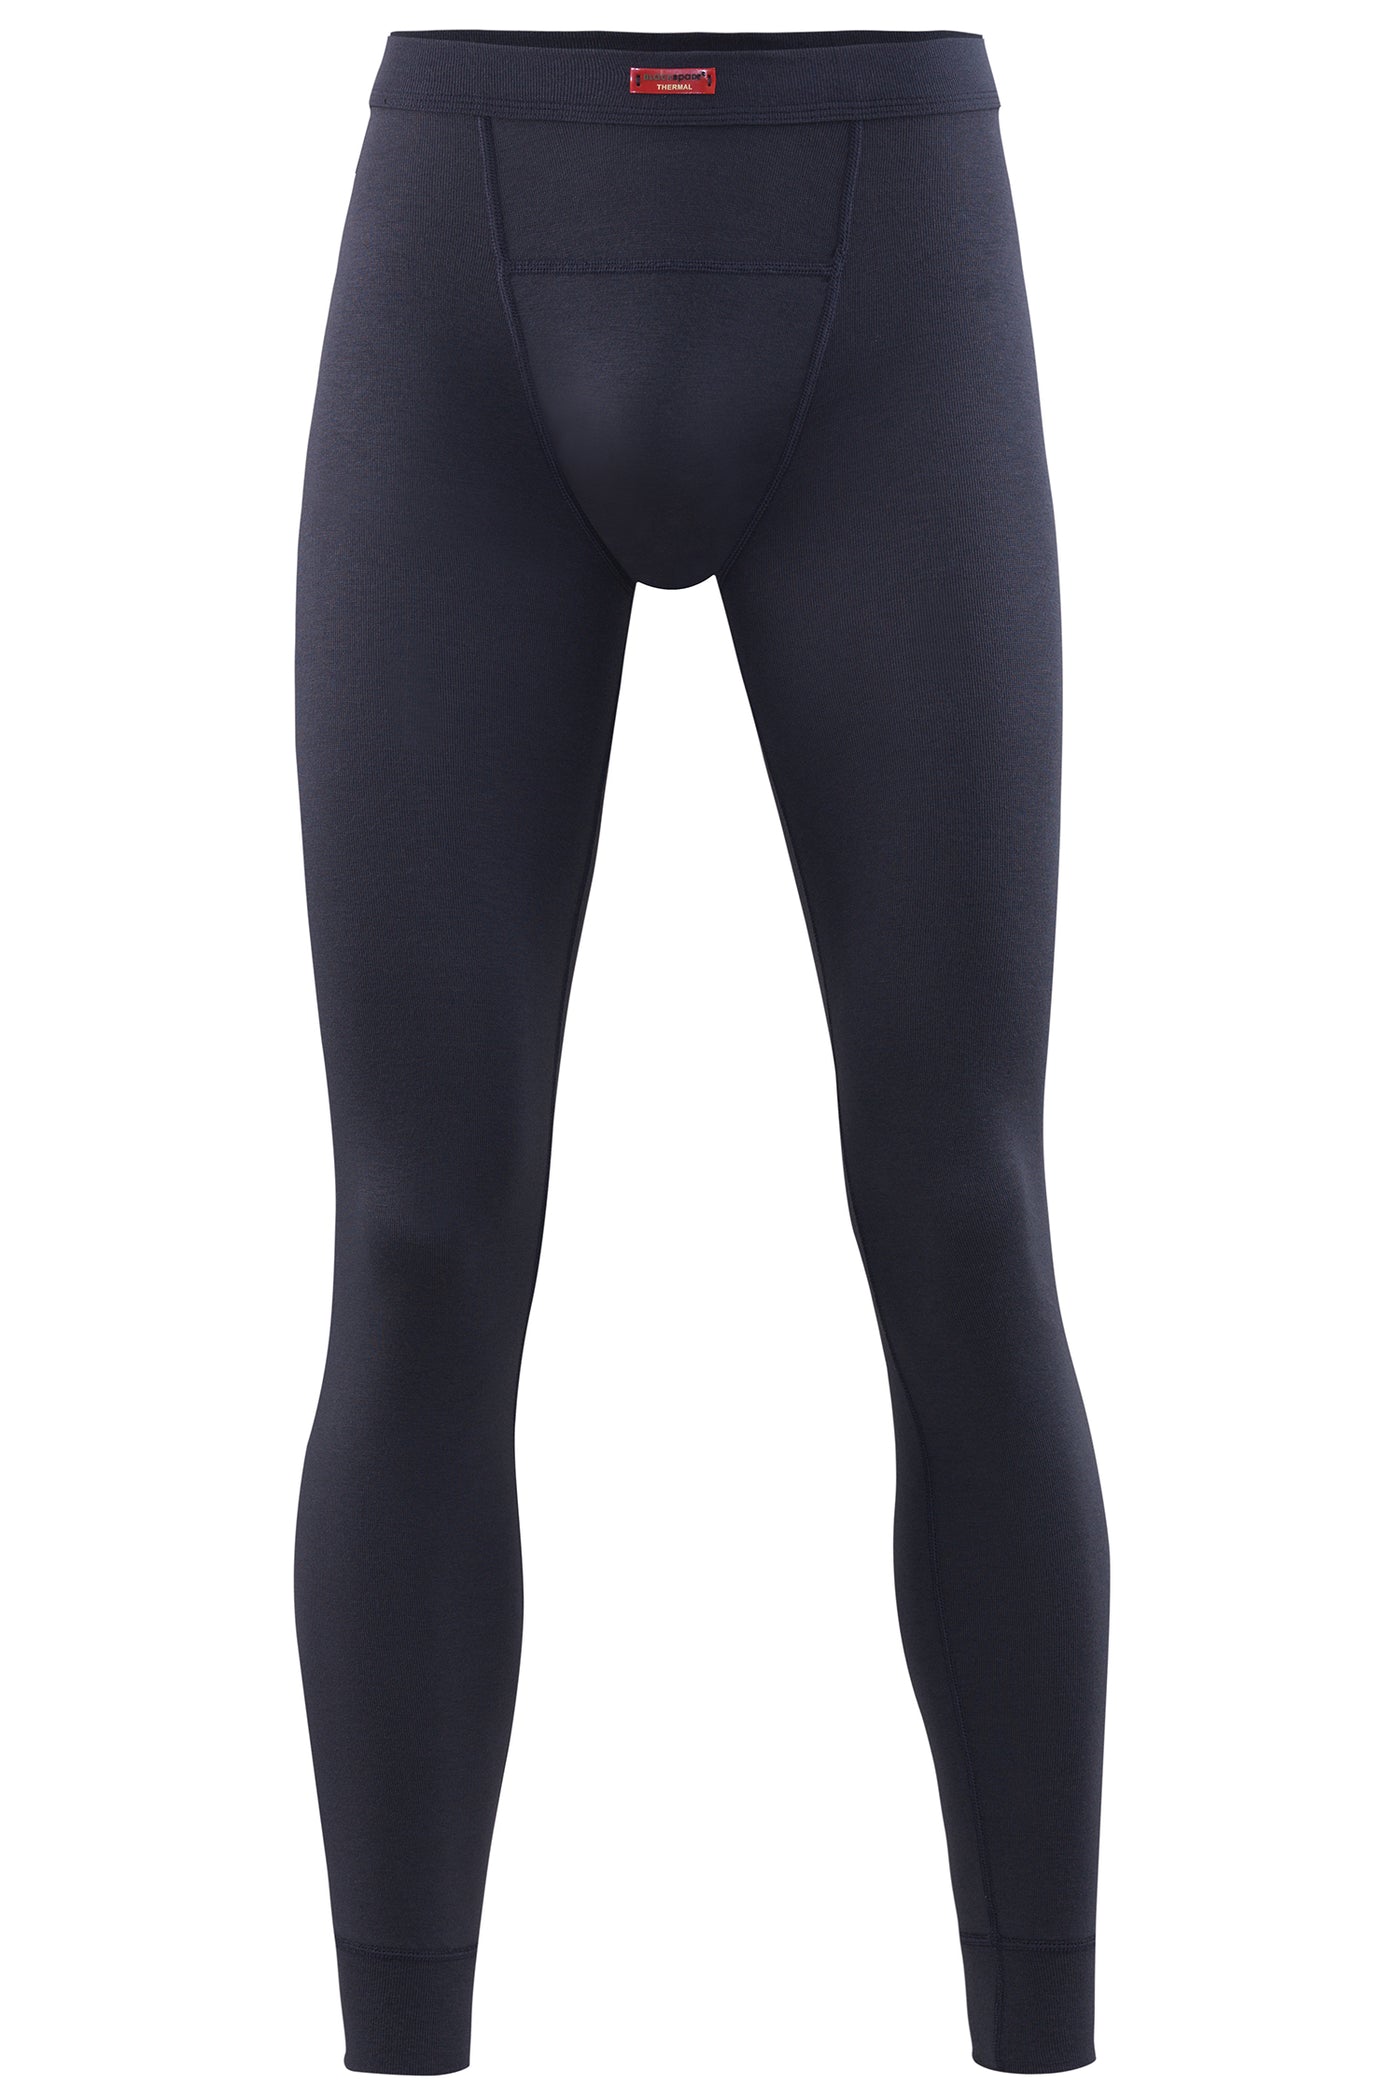 blackspade-Men's thermal pant-9262, level-2-underwear-black